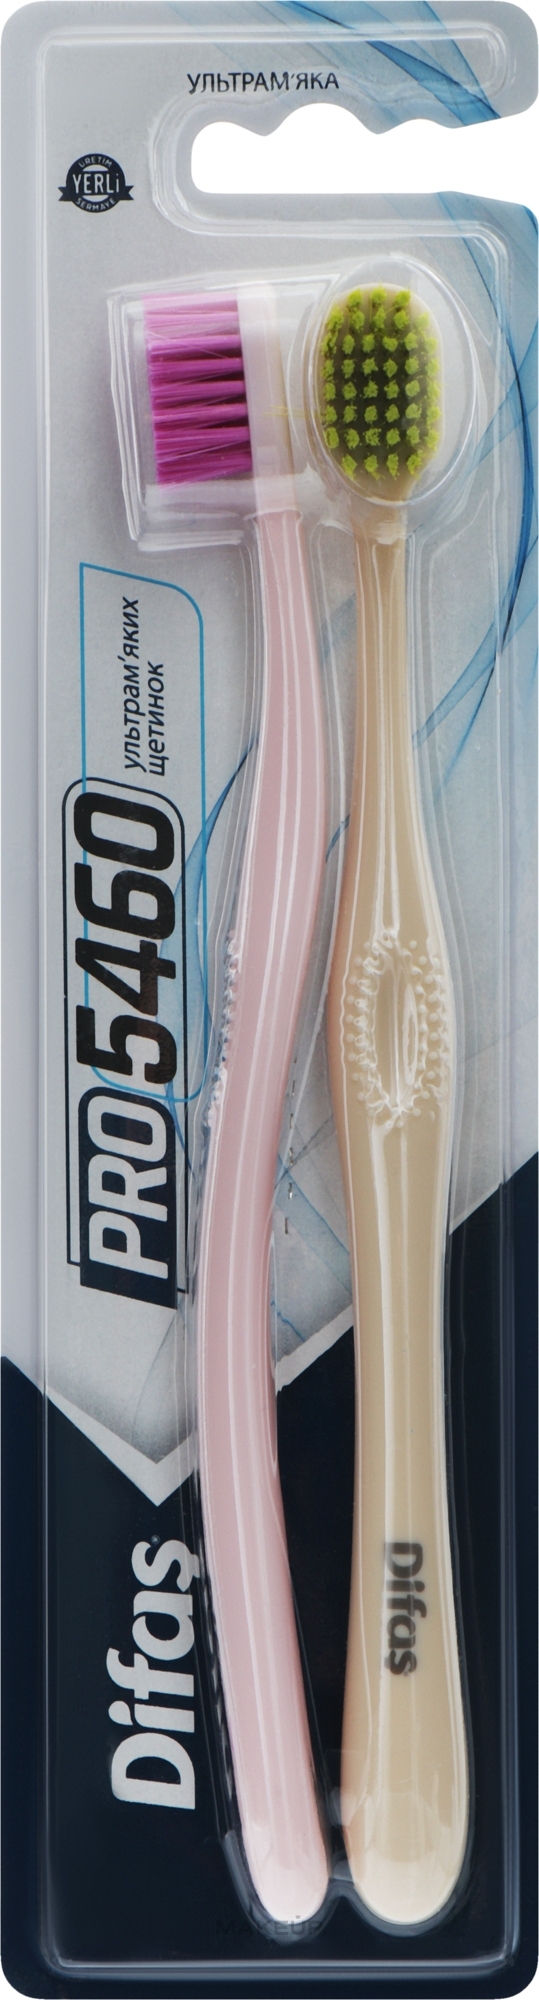 Набор зубных щеток "Ultra Soft", розовая + бежевая - Difas PRO 5460 — фото 2шт